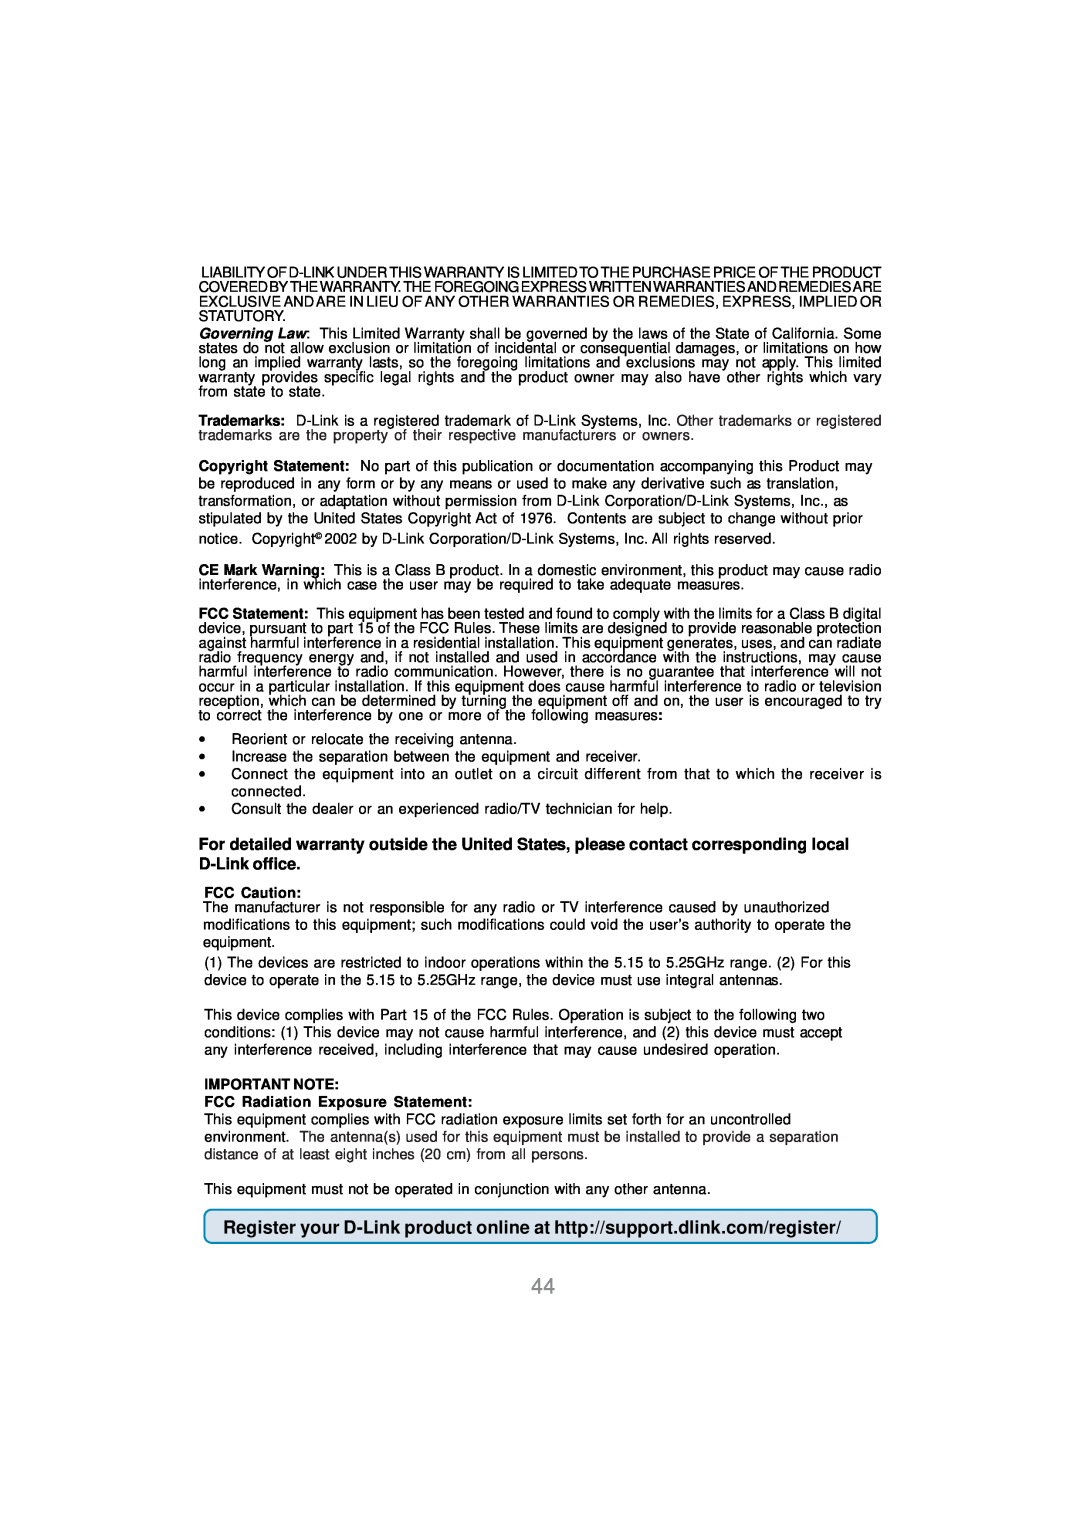 D-Link DWL-AG530 manual FCC Caution, IMPORTANT NOTE FCC Radiation Exposure Statement 